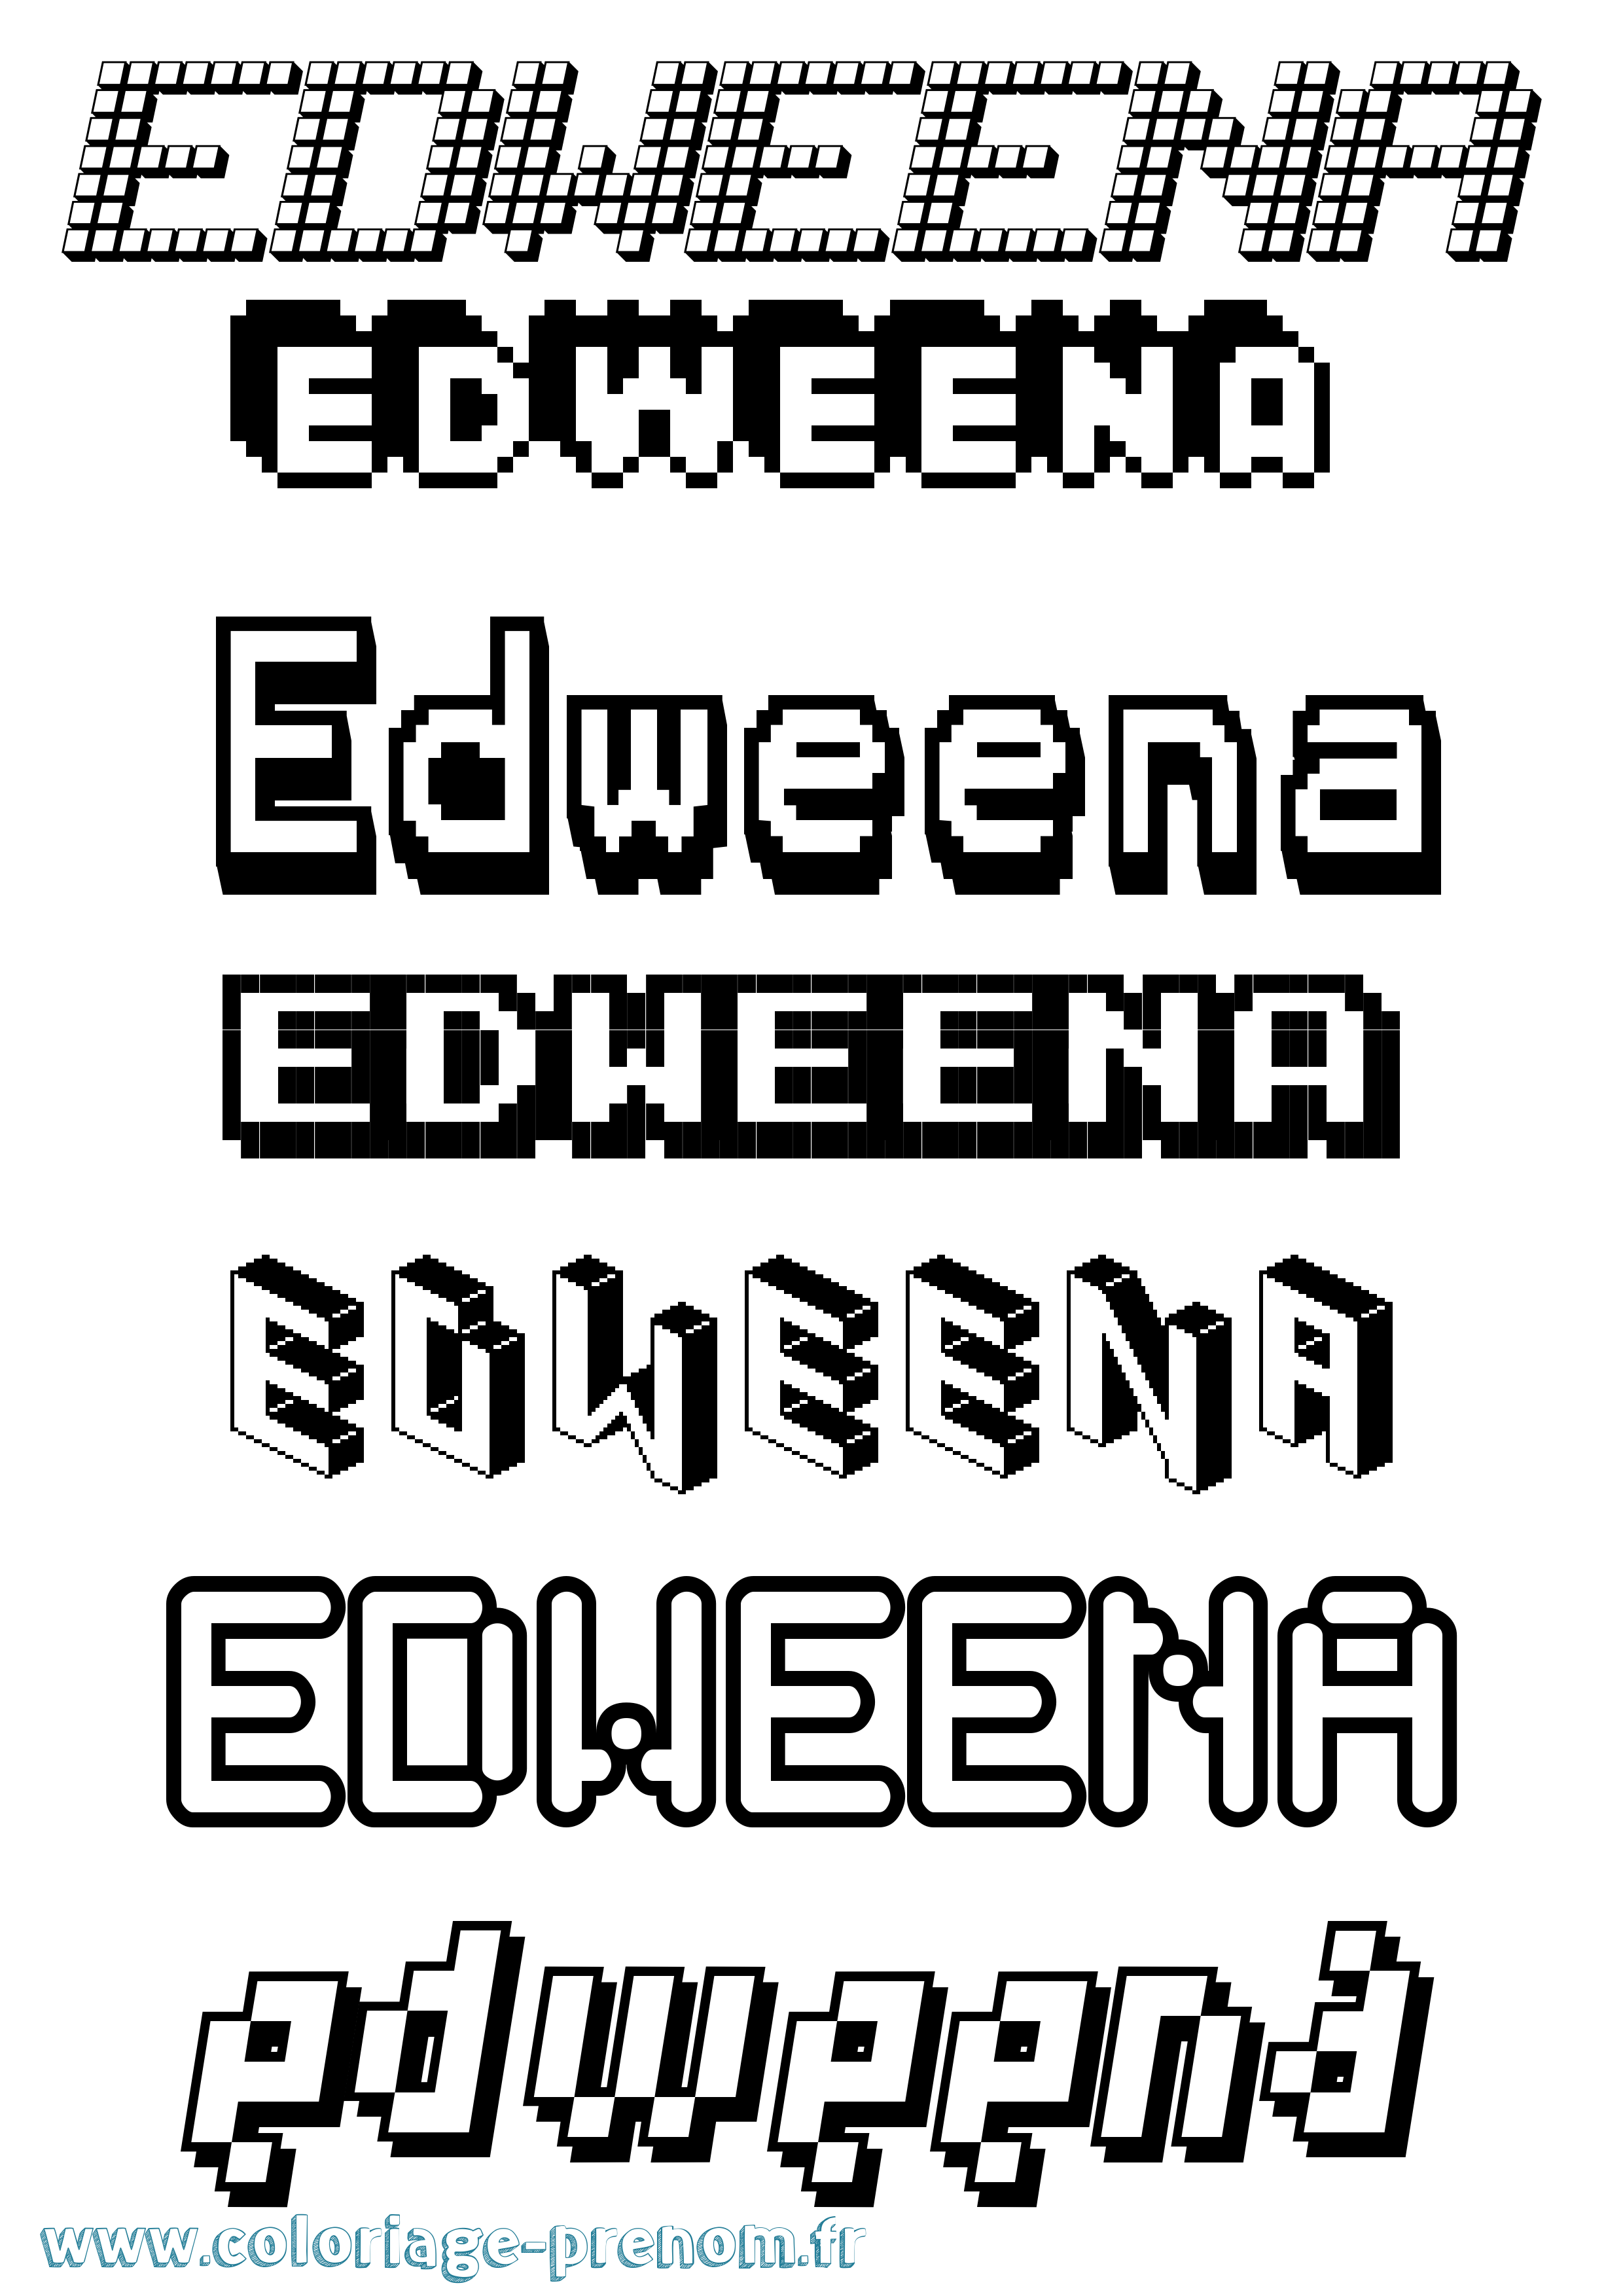 Coloriage prénom Edweena Pixel